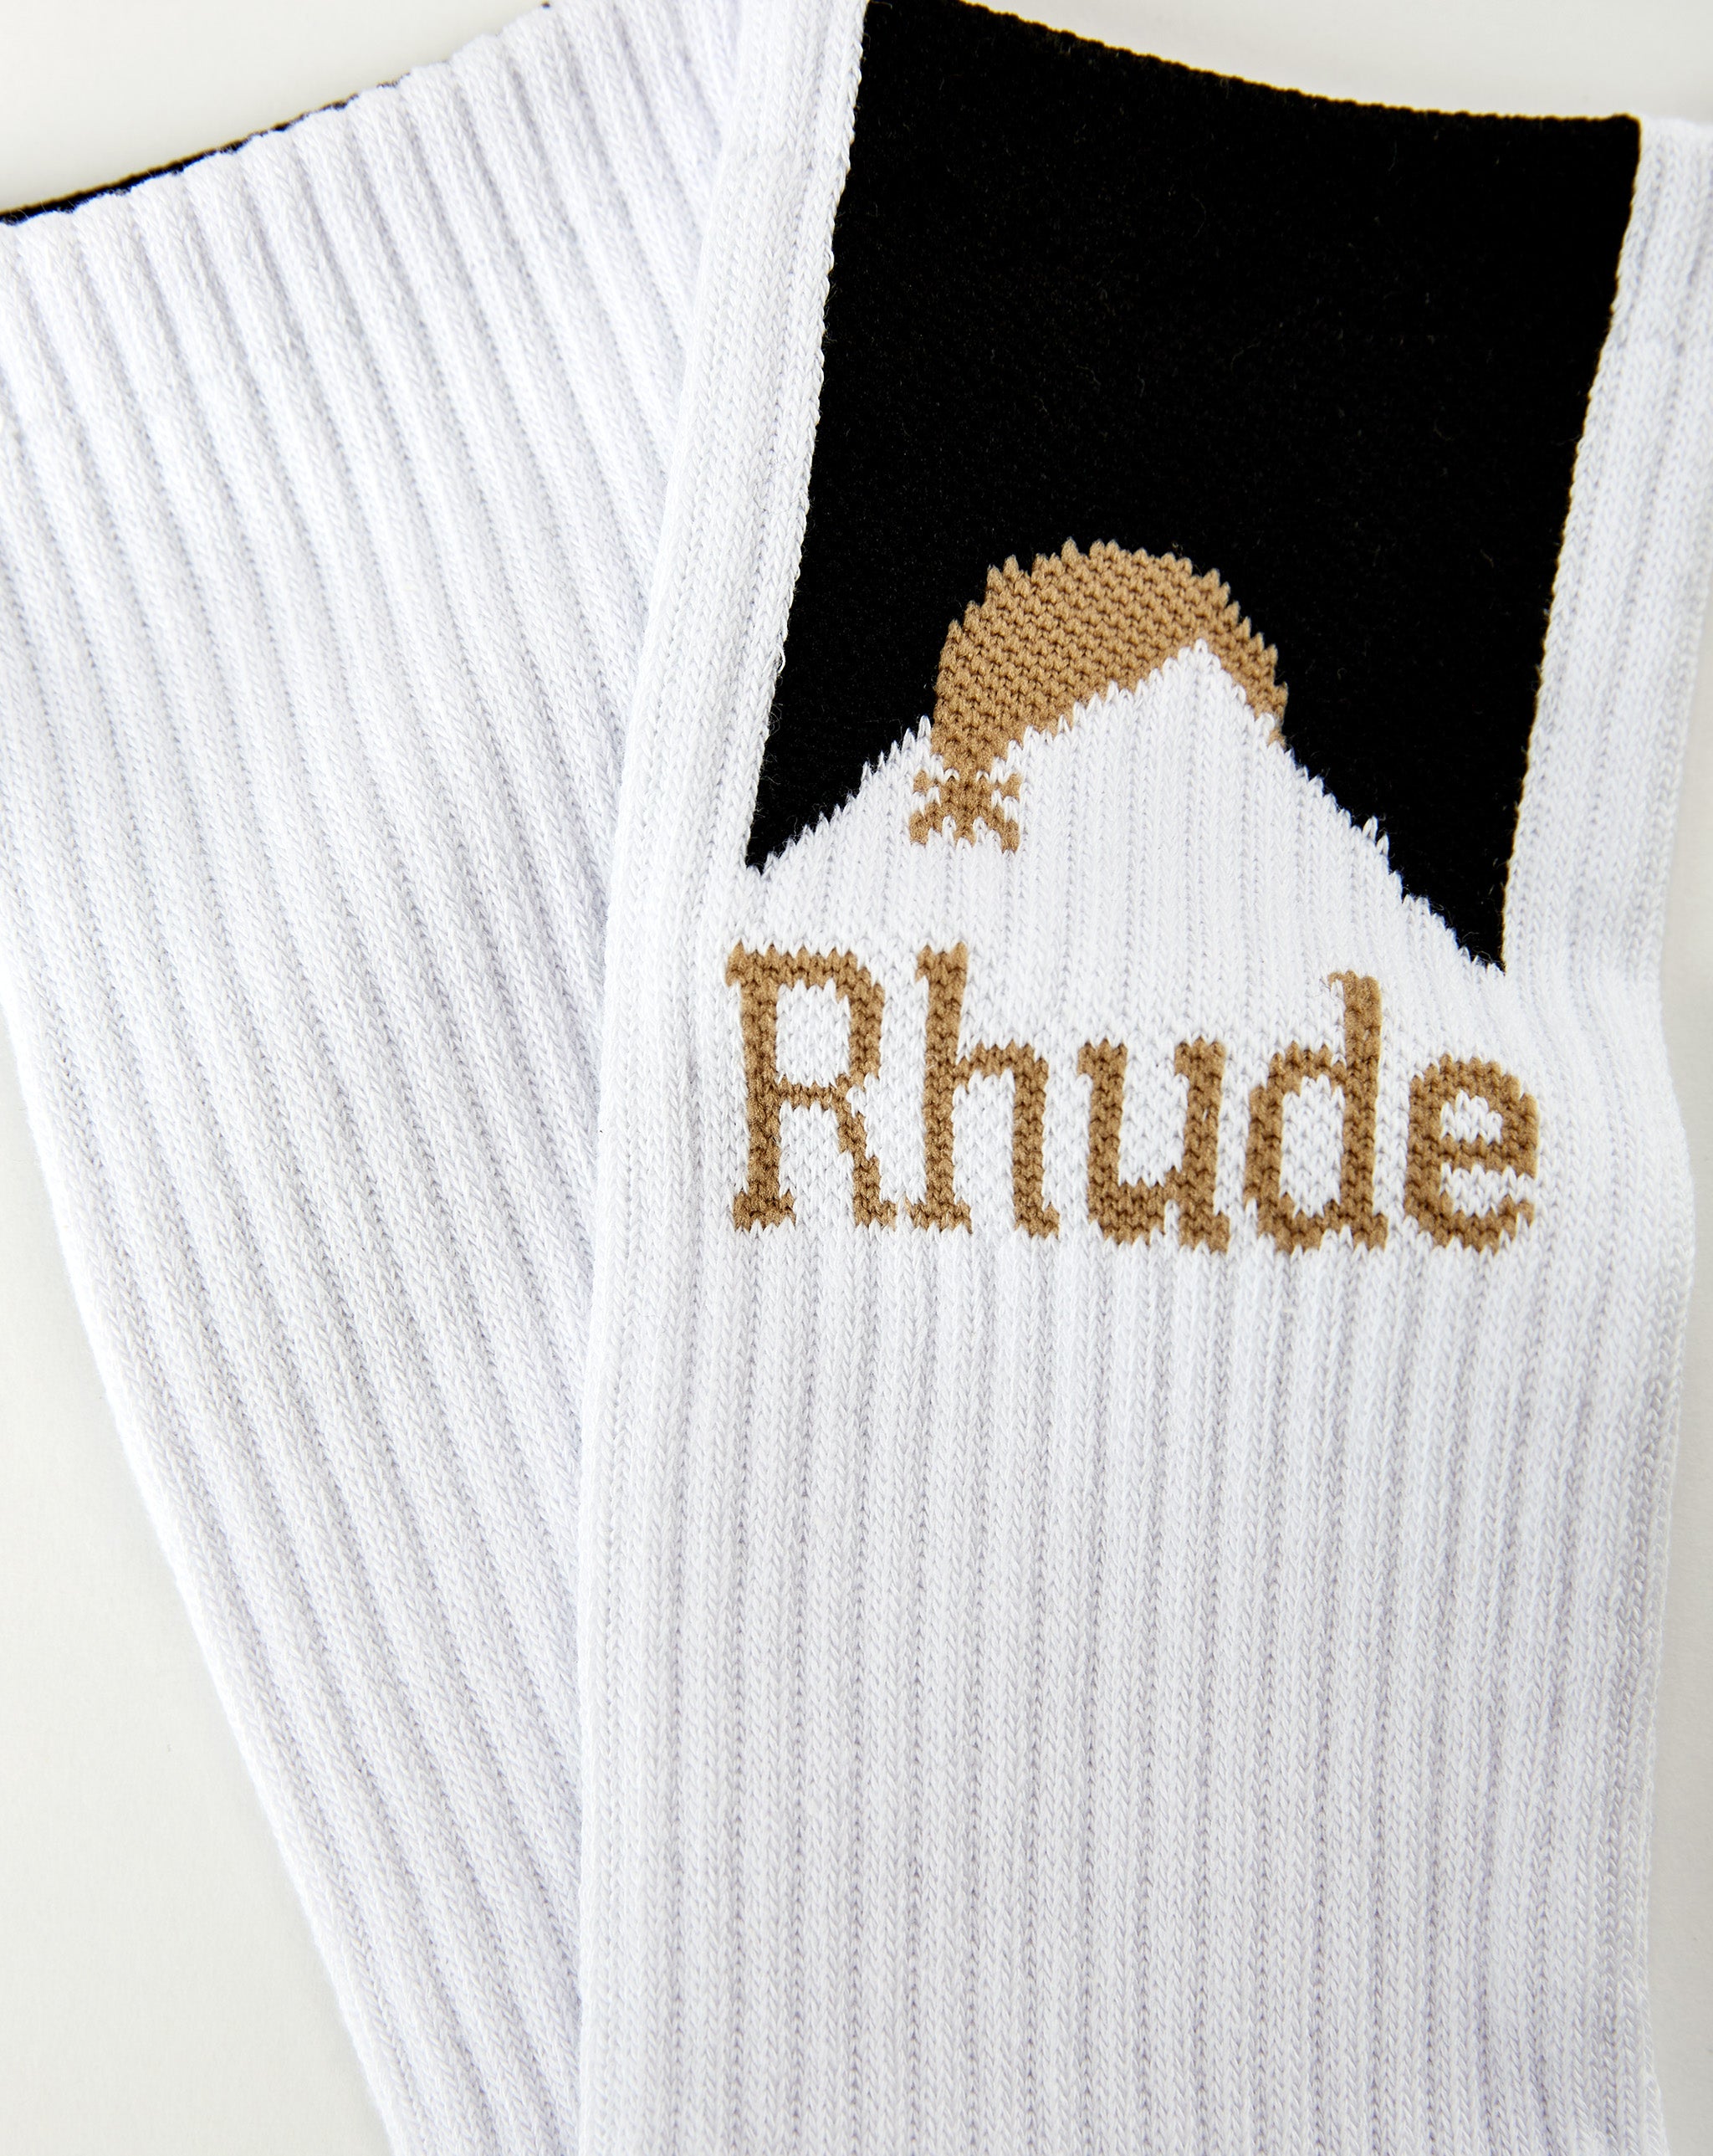 Rhude Rhude Moodlight Socks  - XHIBITION